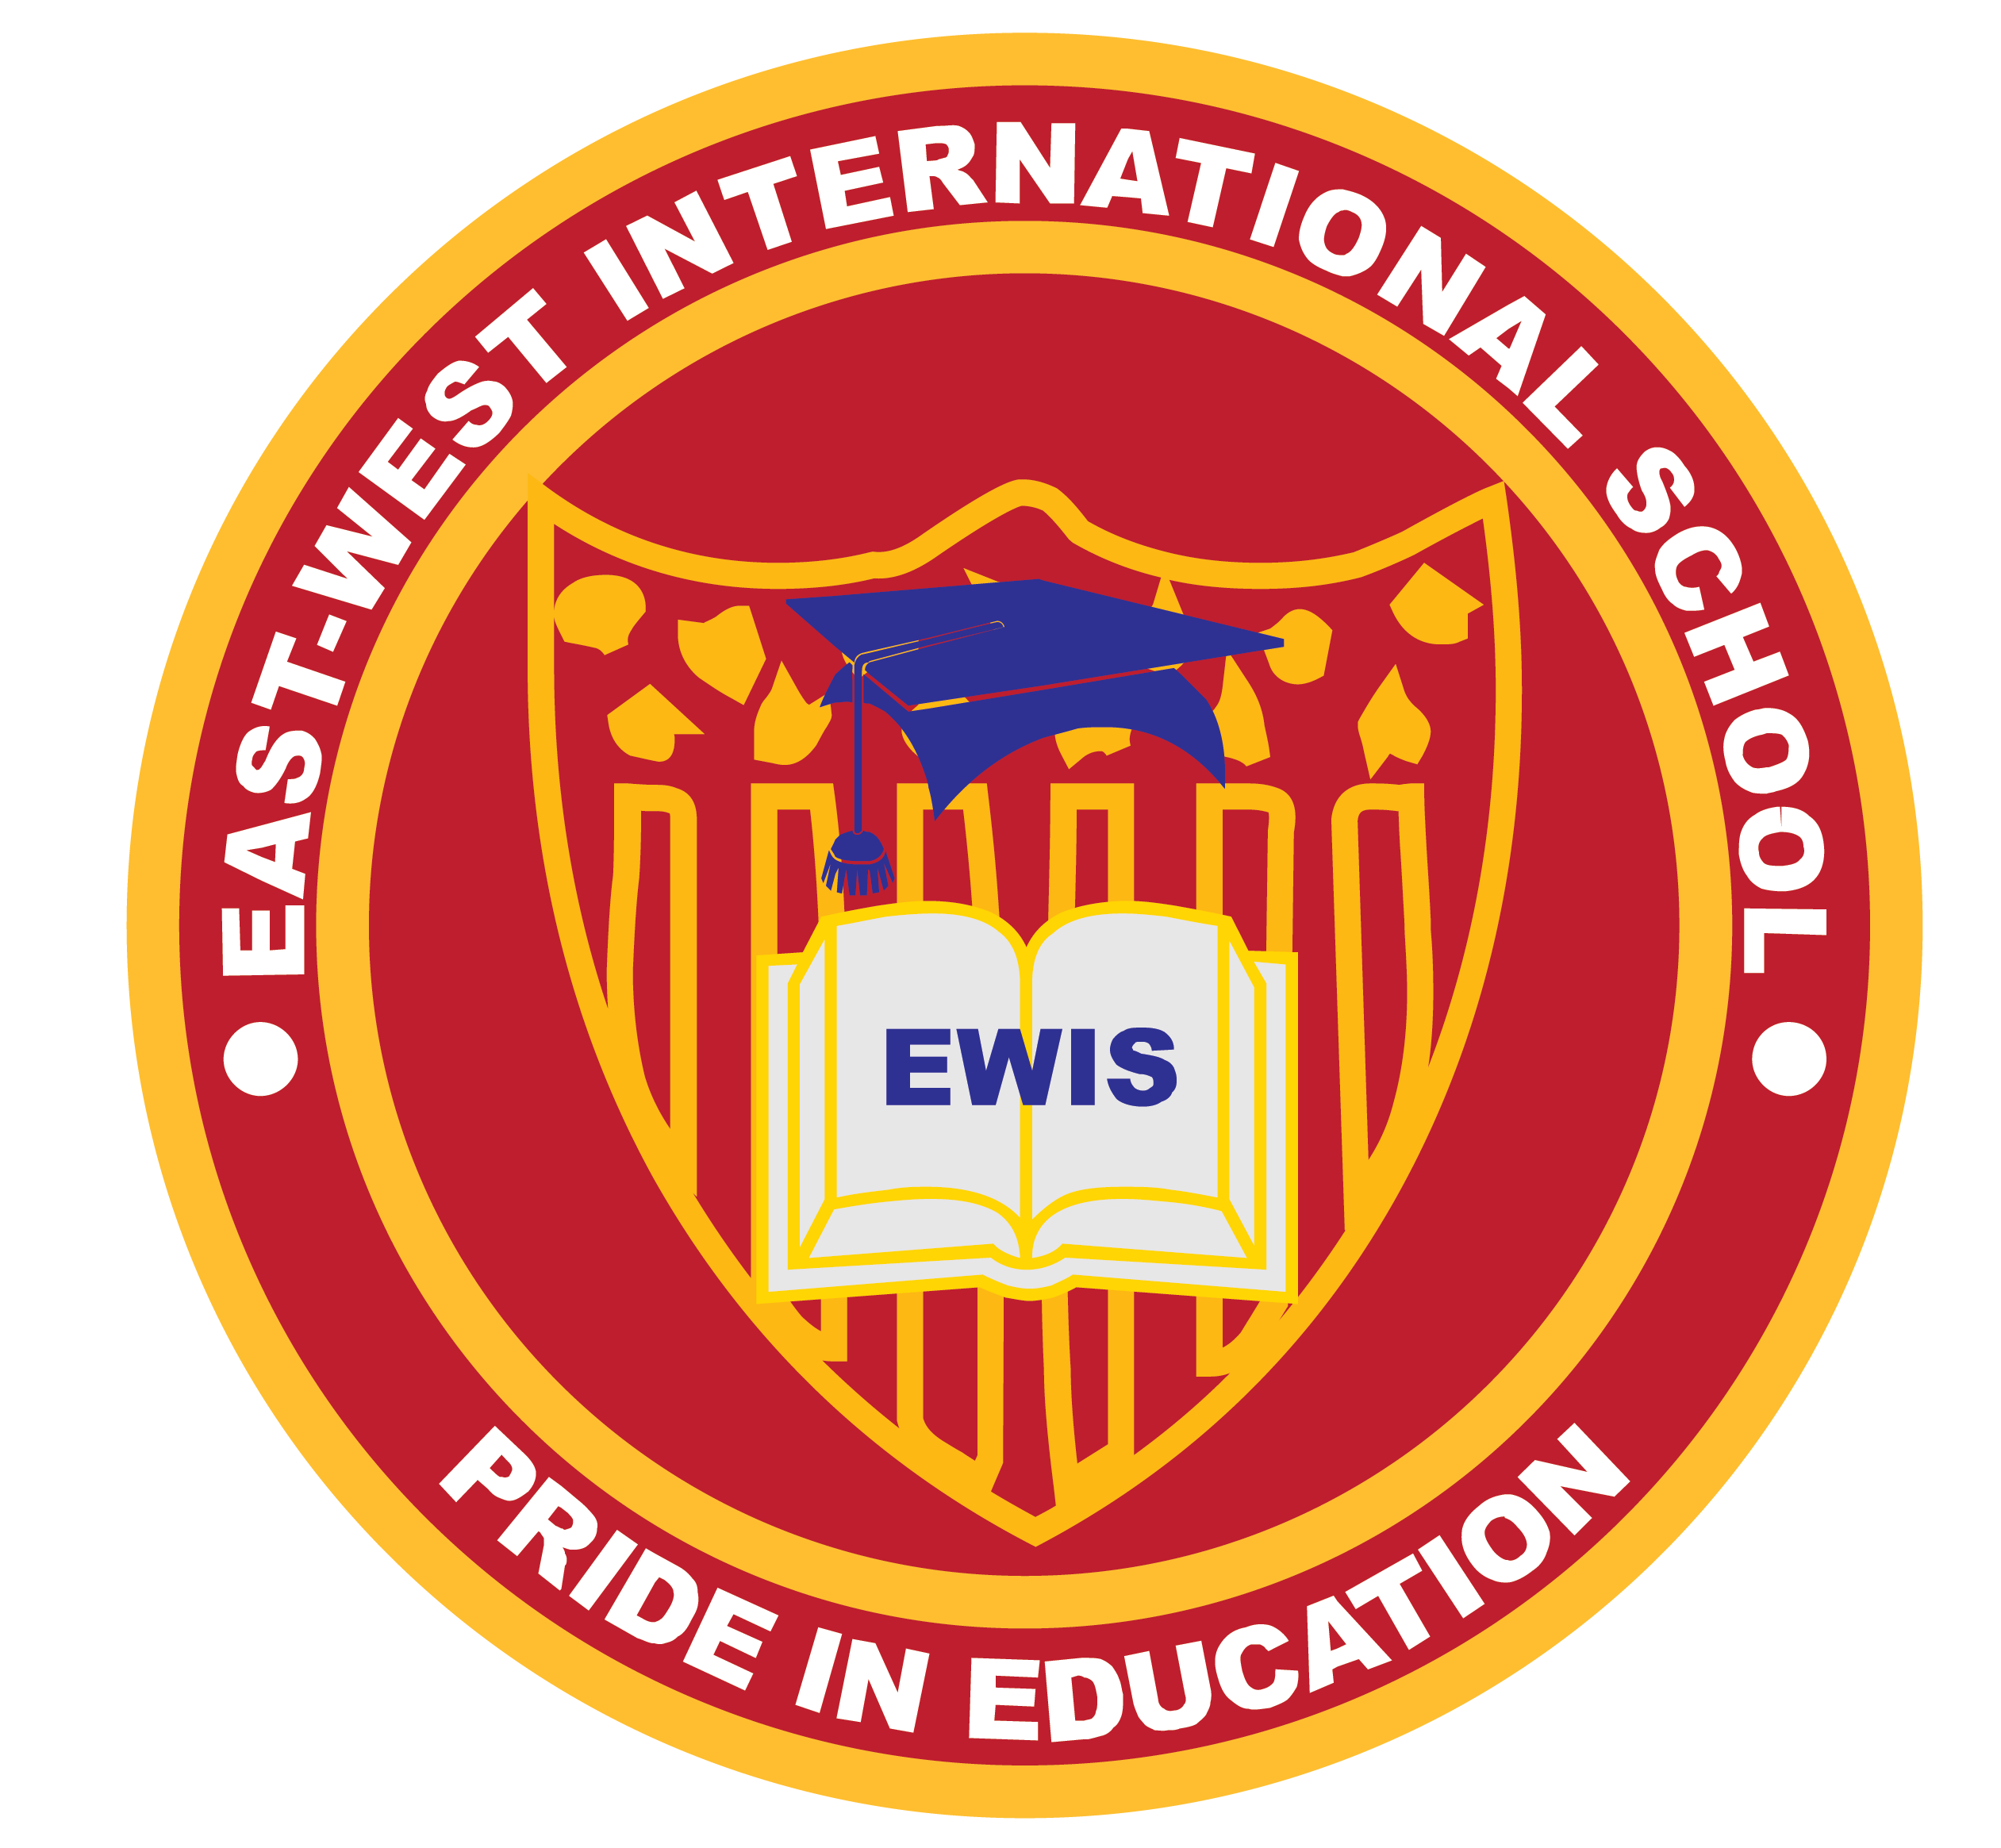 East-West International School